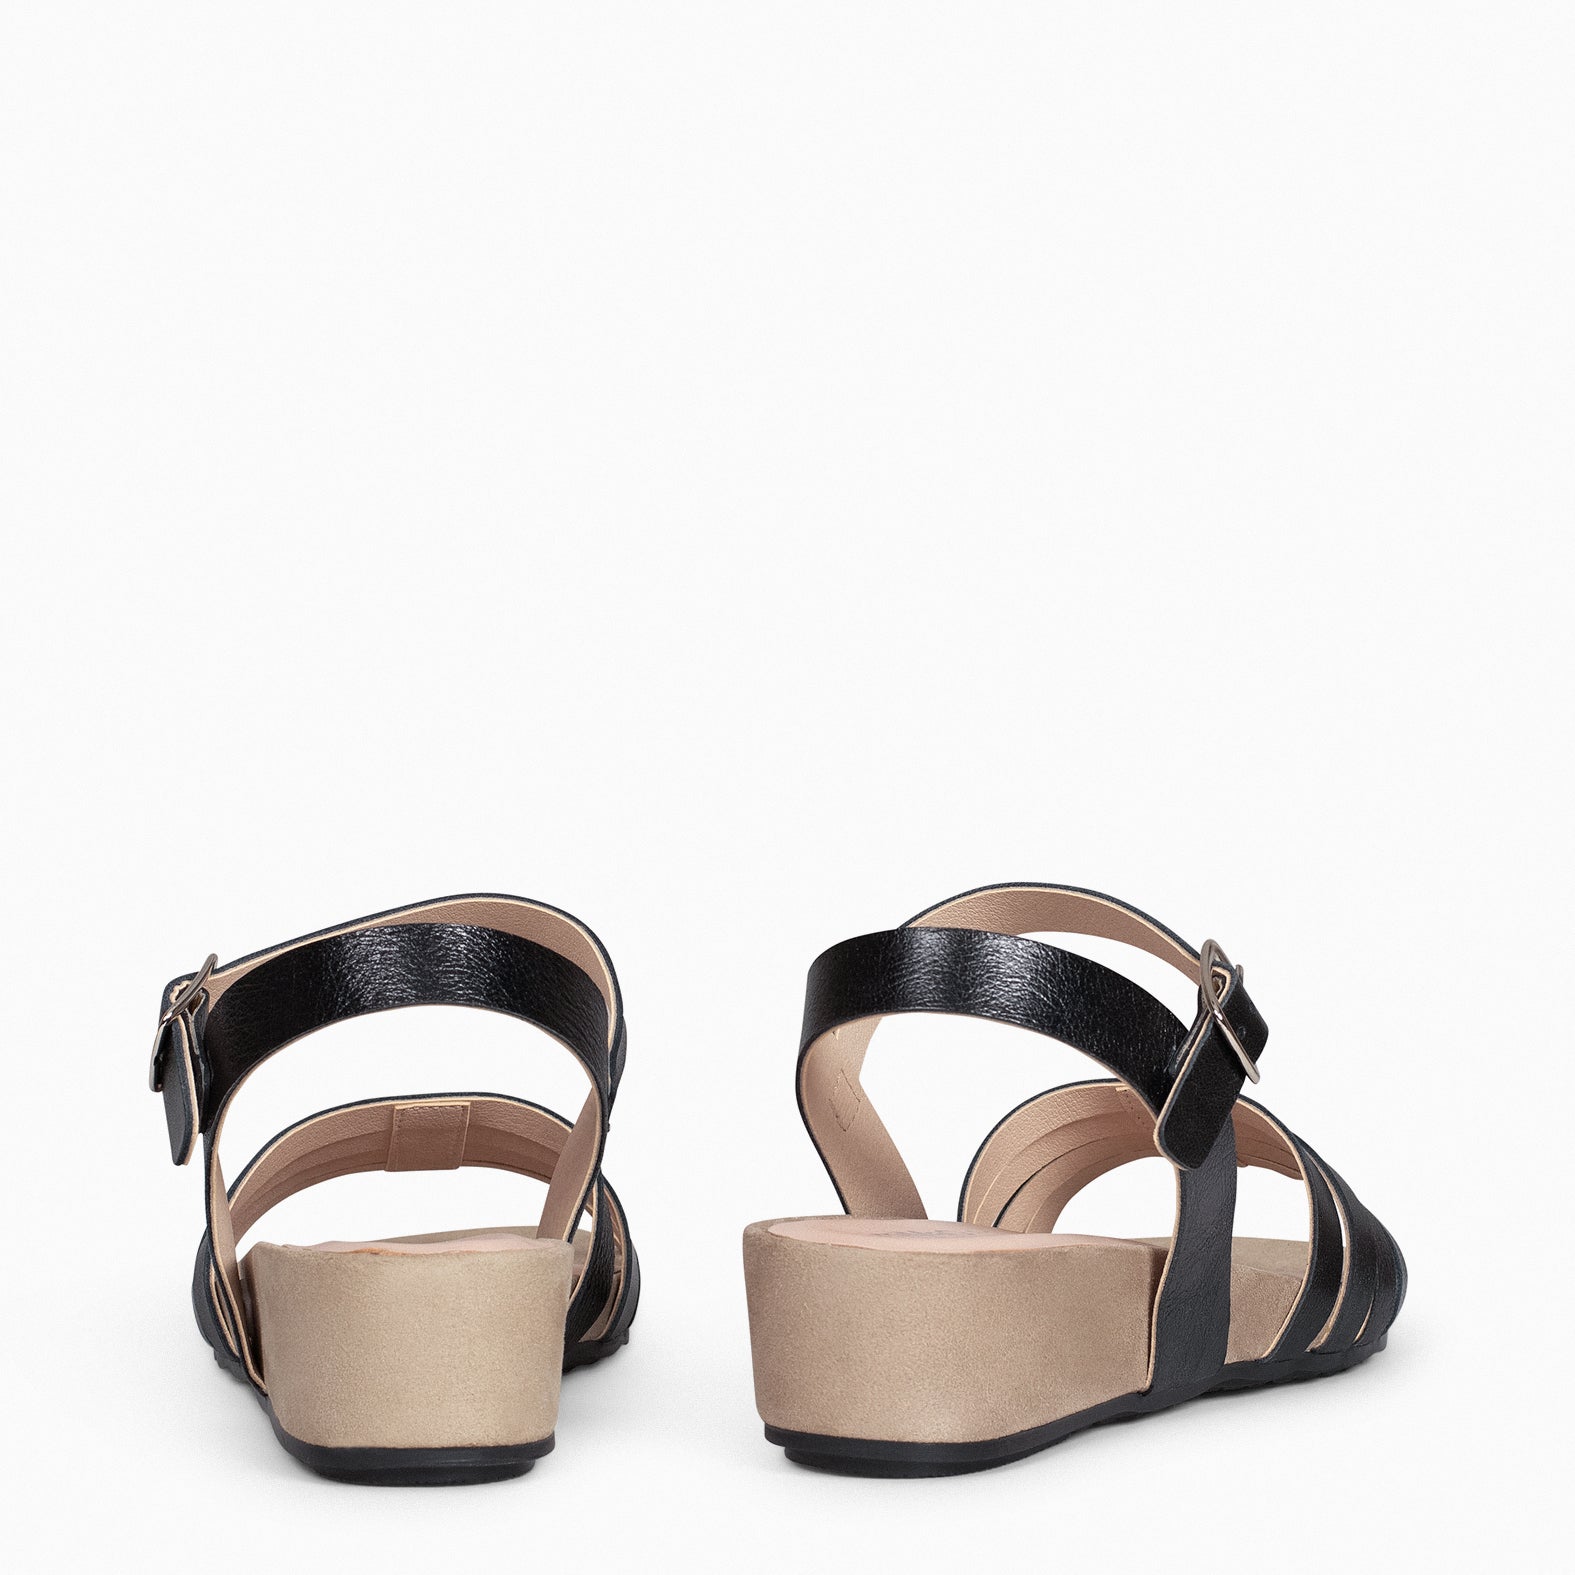 MESINA – BLACK Wedge sandal with metallic straps 